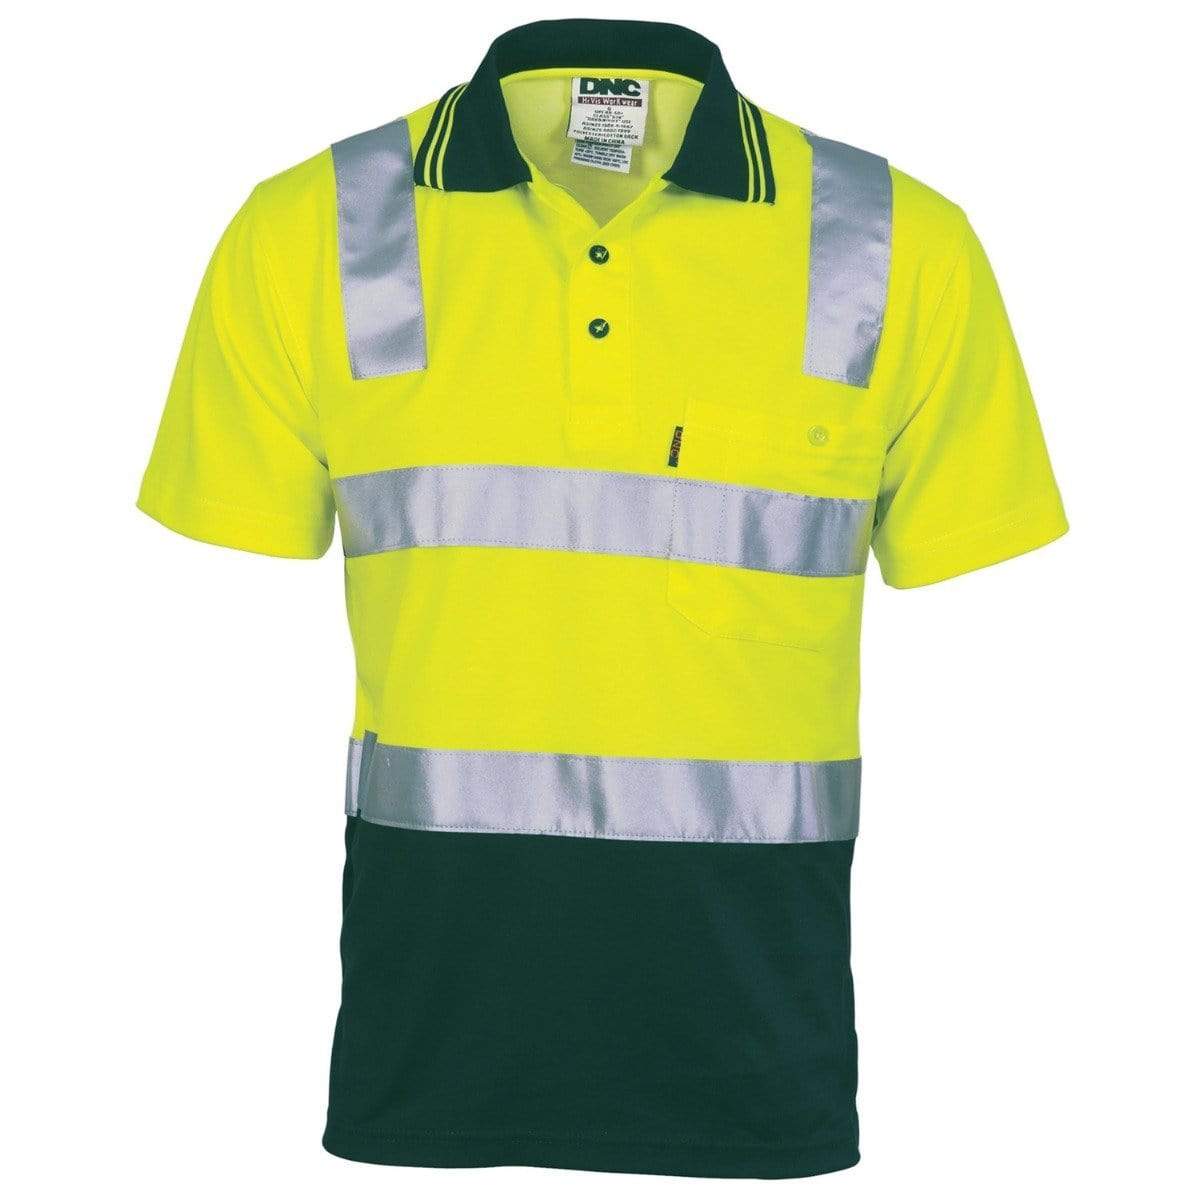 Dnc Workwear Cotton Back Hi-vis Two-tone Short Sleeve Polo Shirt With Csr Reflective Tape - 3817 Work Wear DNC Workwear Yellow/Bottle Green 5XL 